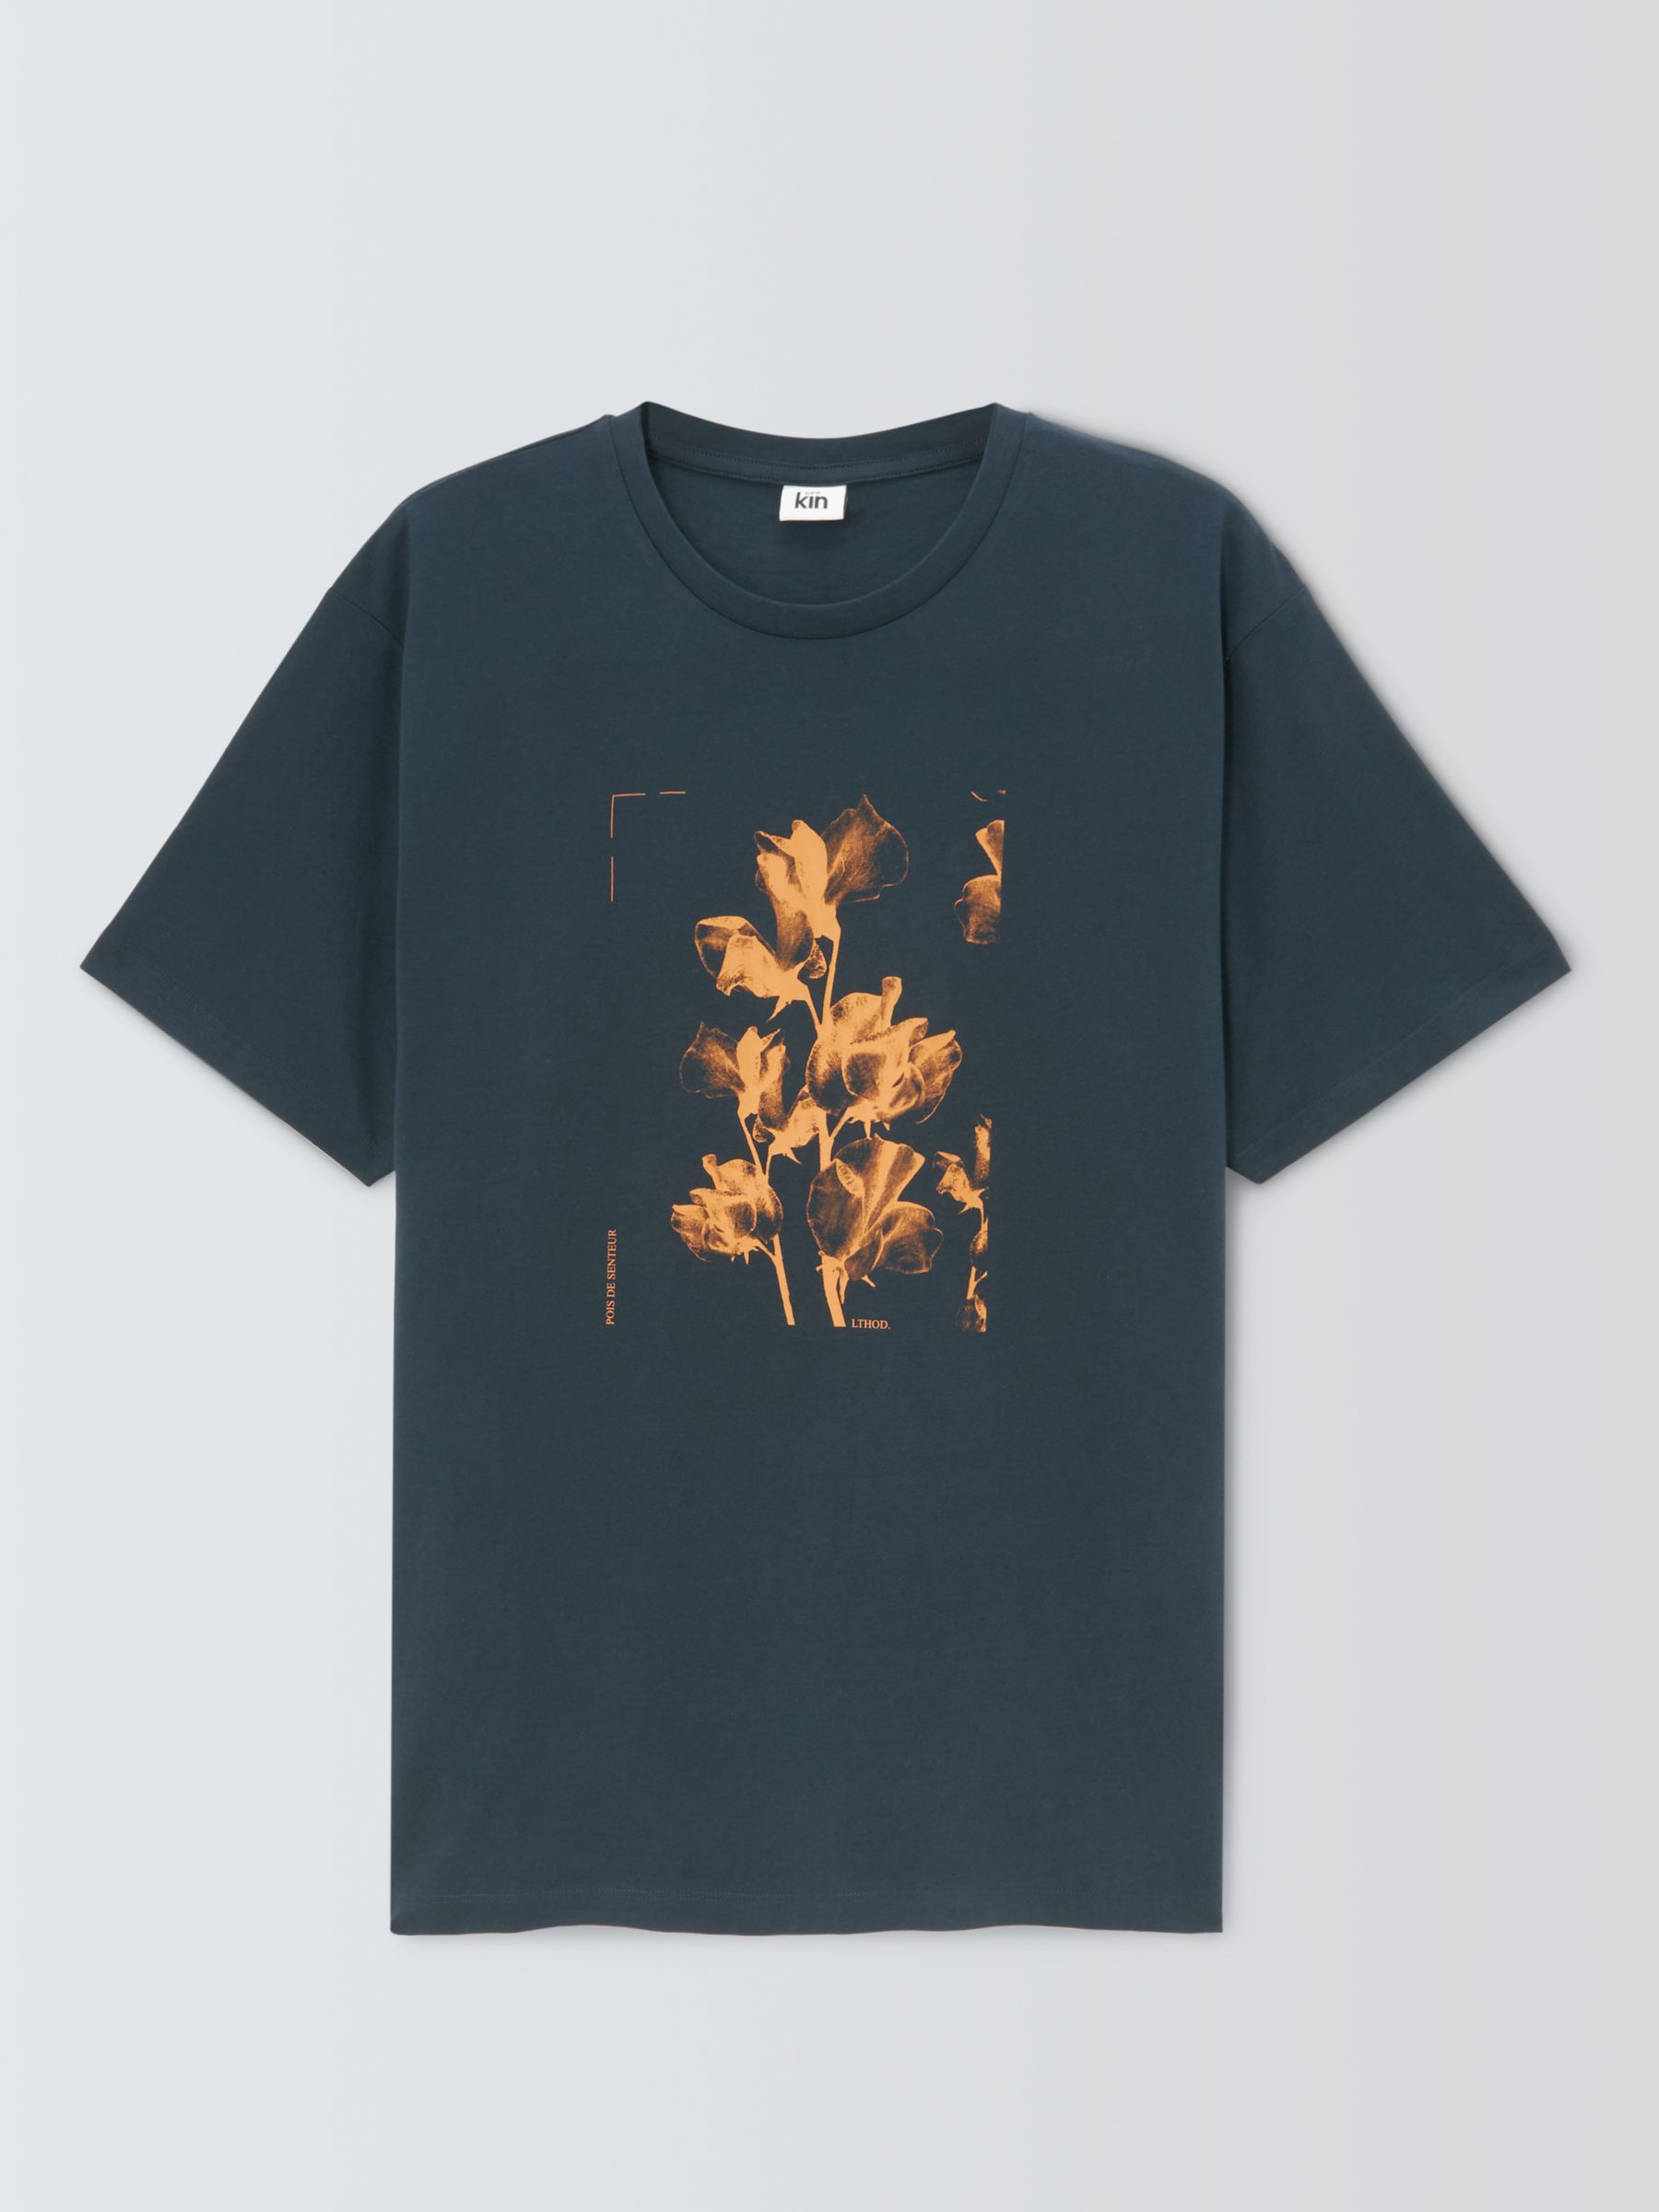 Kin Abstract Sweet Pea Short Sleeve T-Shirt, Dark Navy, M